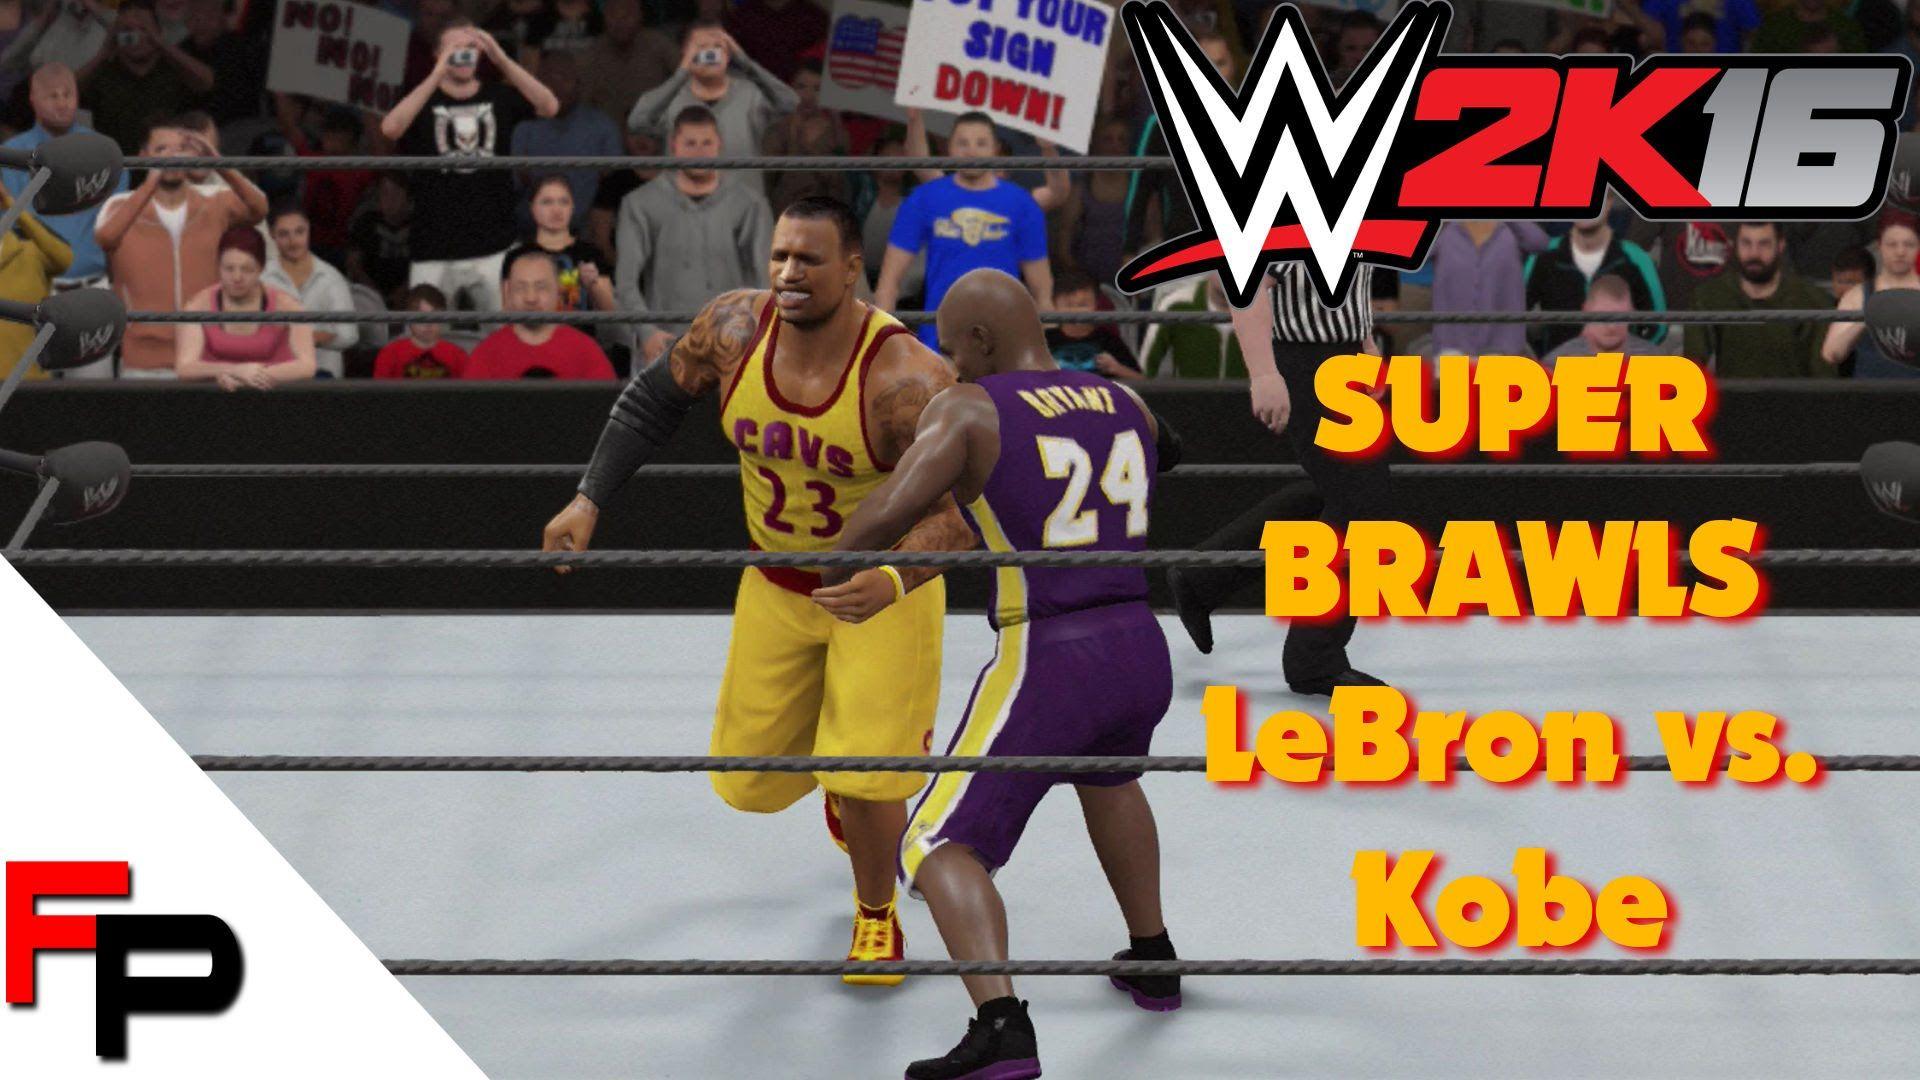 LeBron James vs. Kobe Bryant Grudge Match 2K16 SuperBrawls